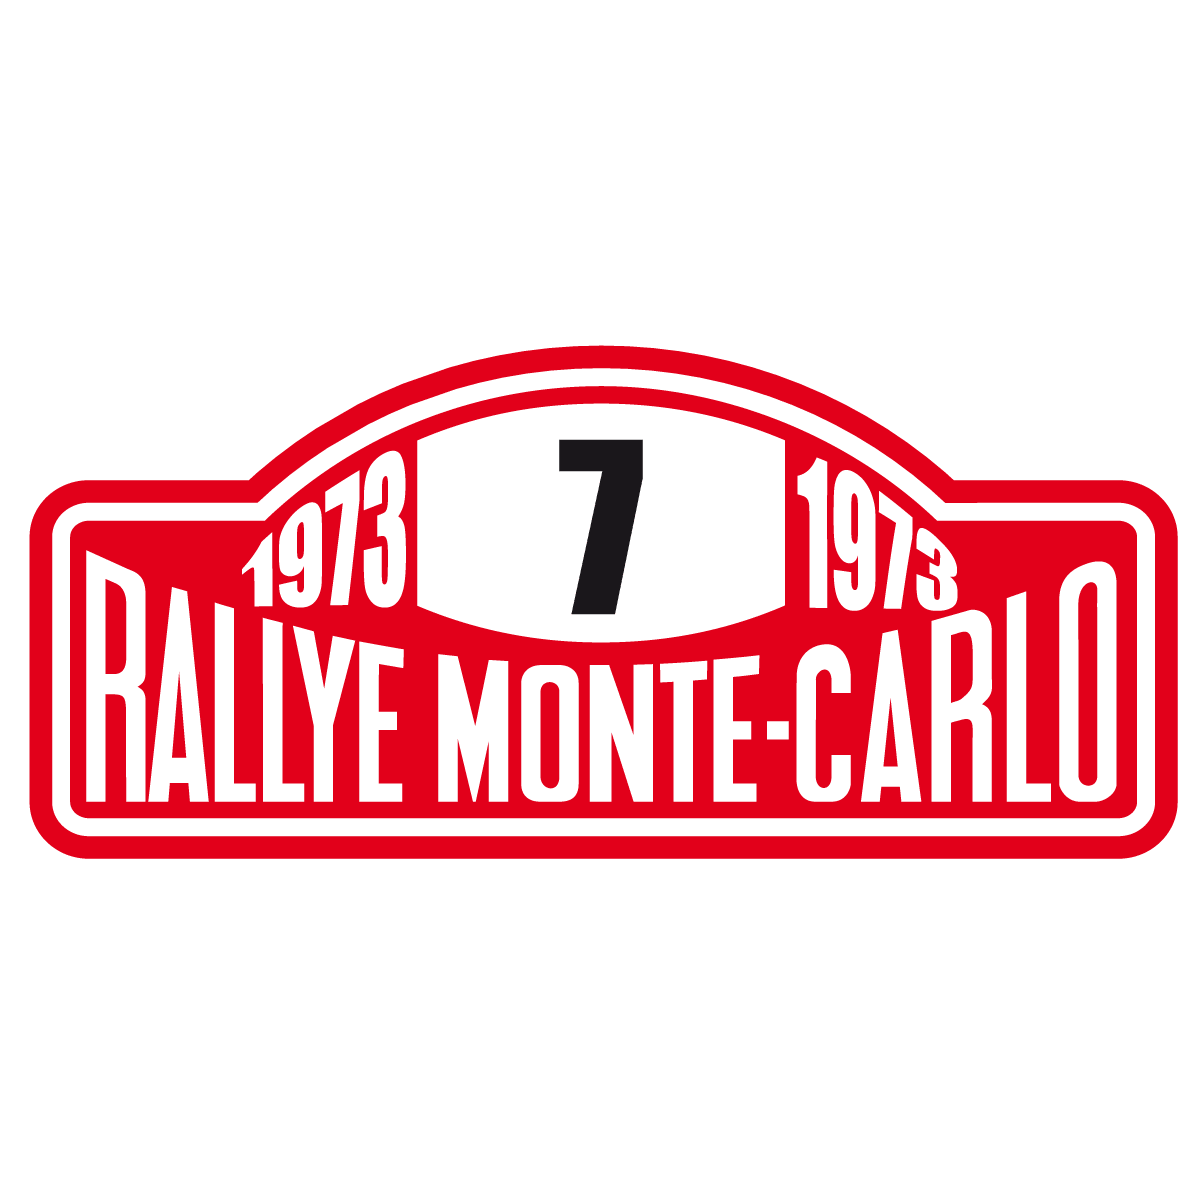 Pegatinas: Rallye Monte-Carlo